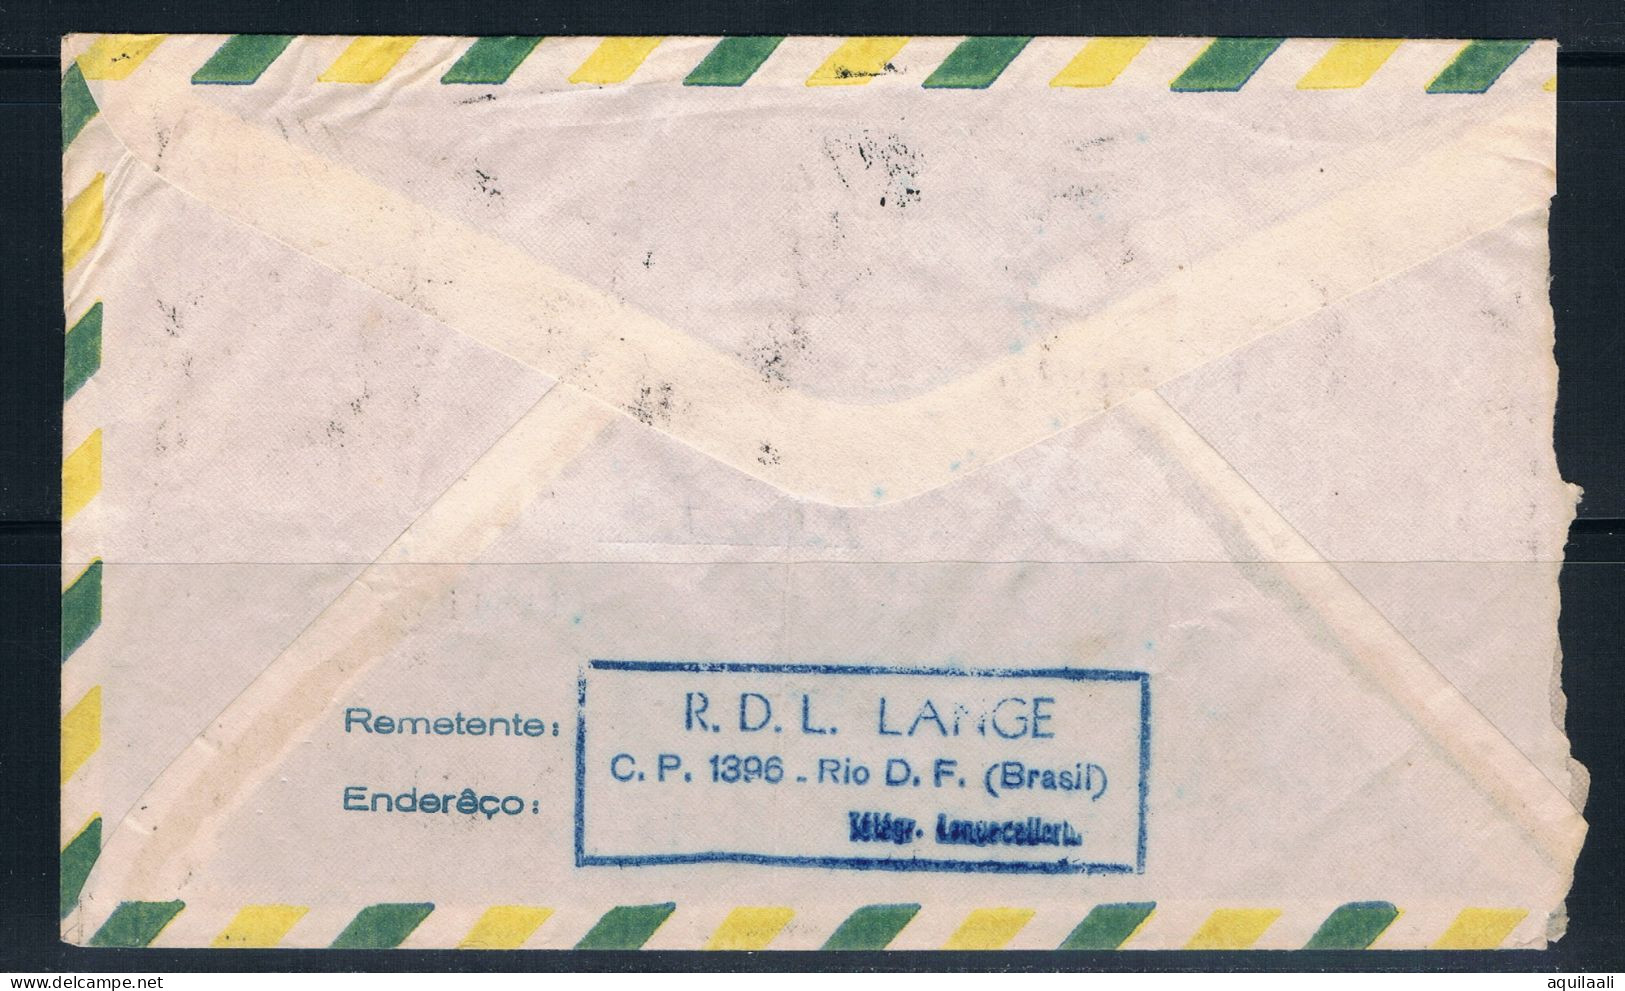 Storia Postale Brasile1966. Lettera Per Aosta, Italia. - Lettres & Documents